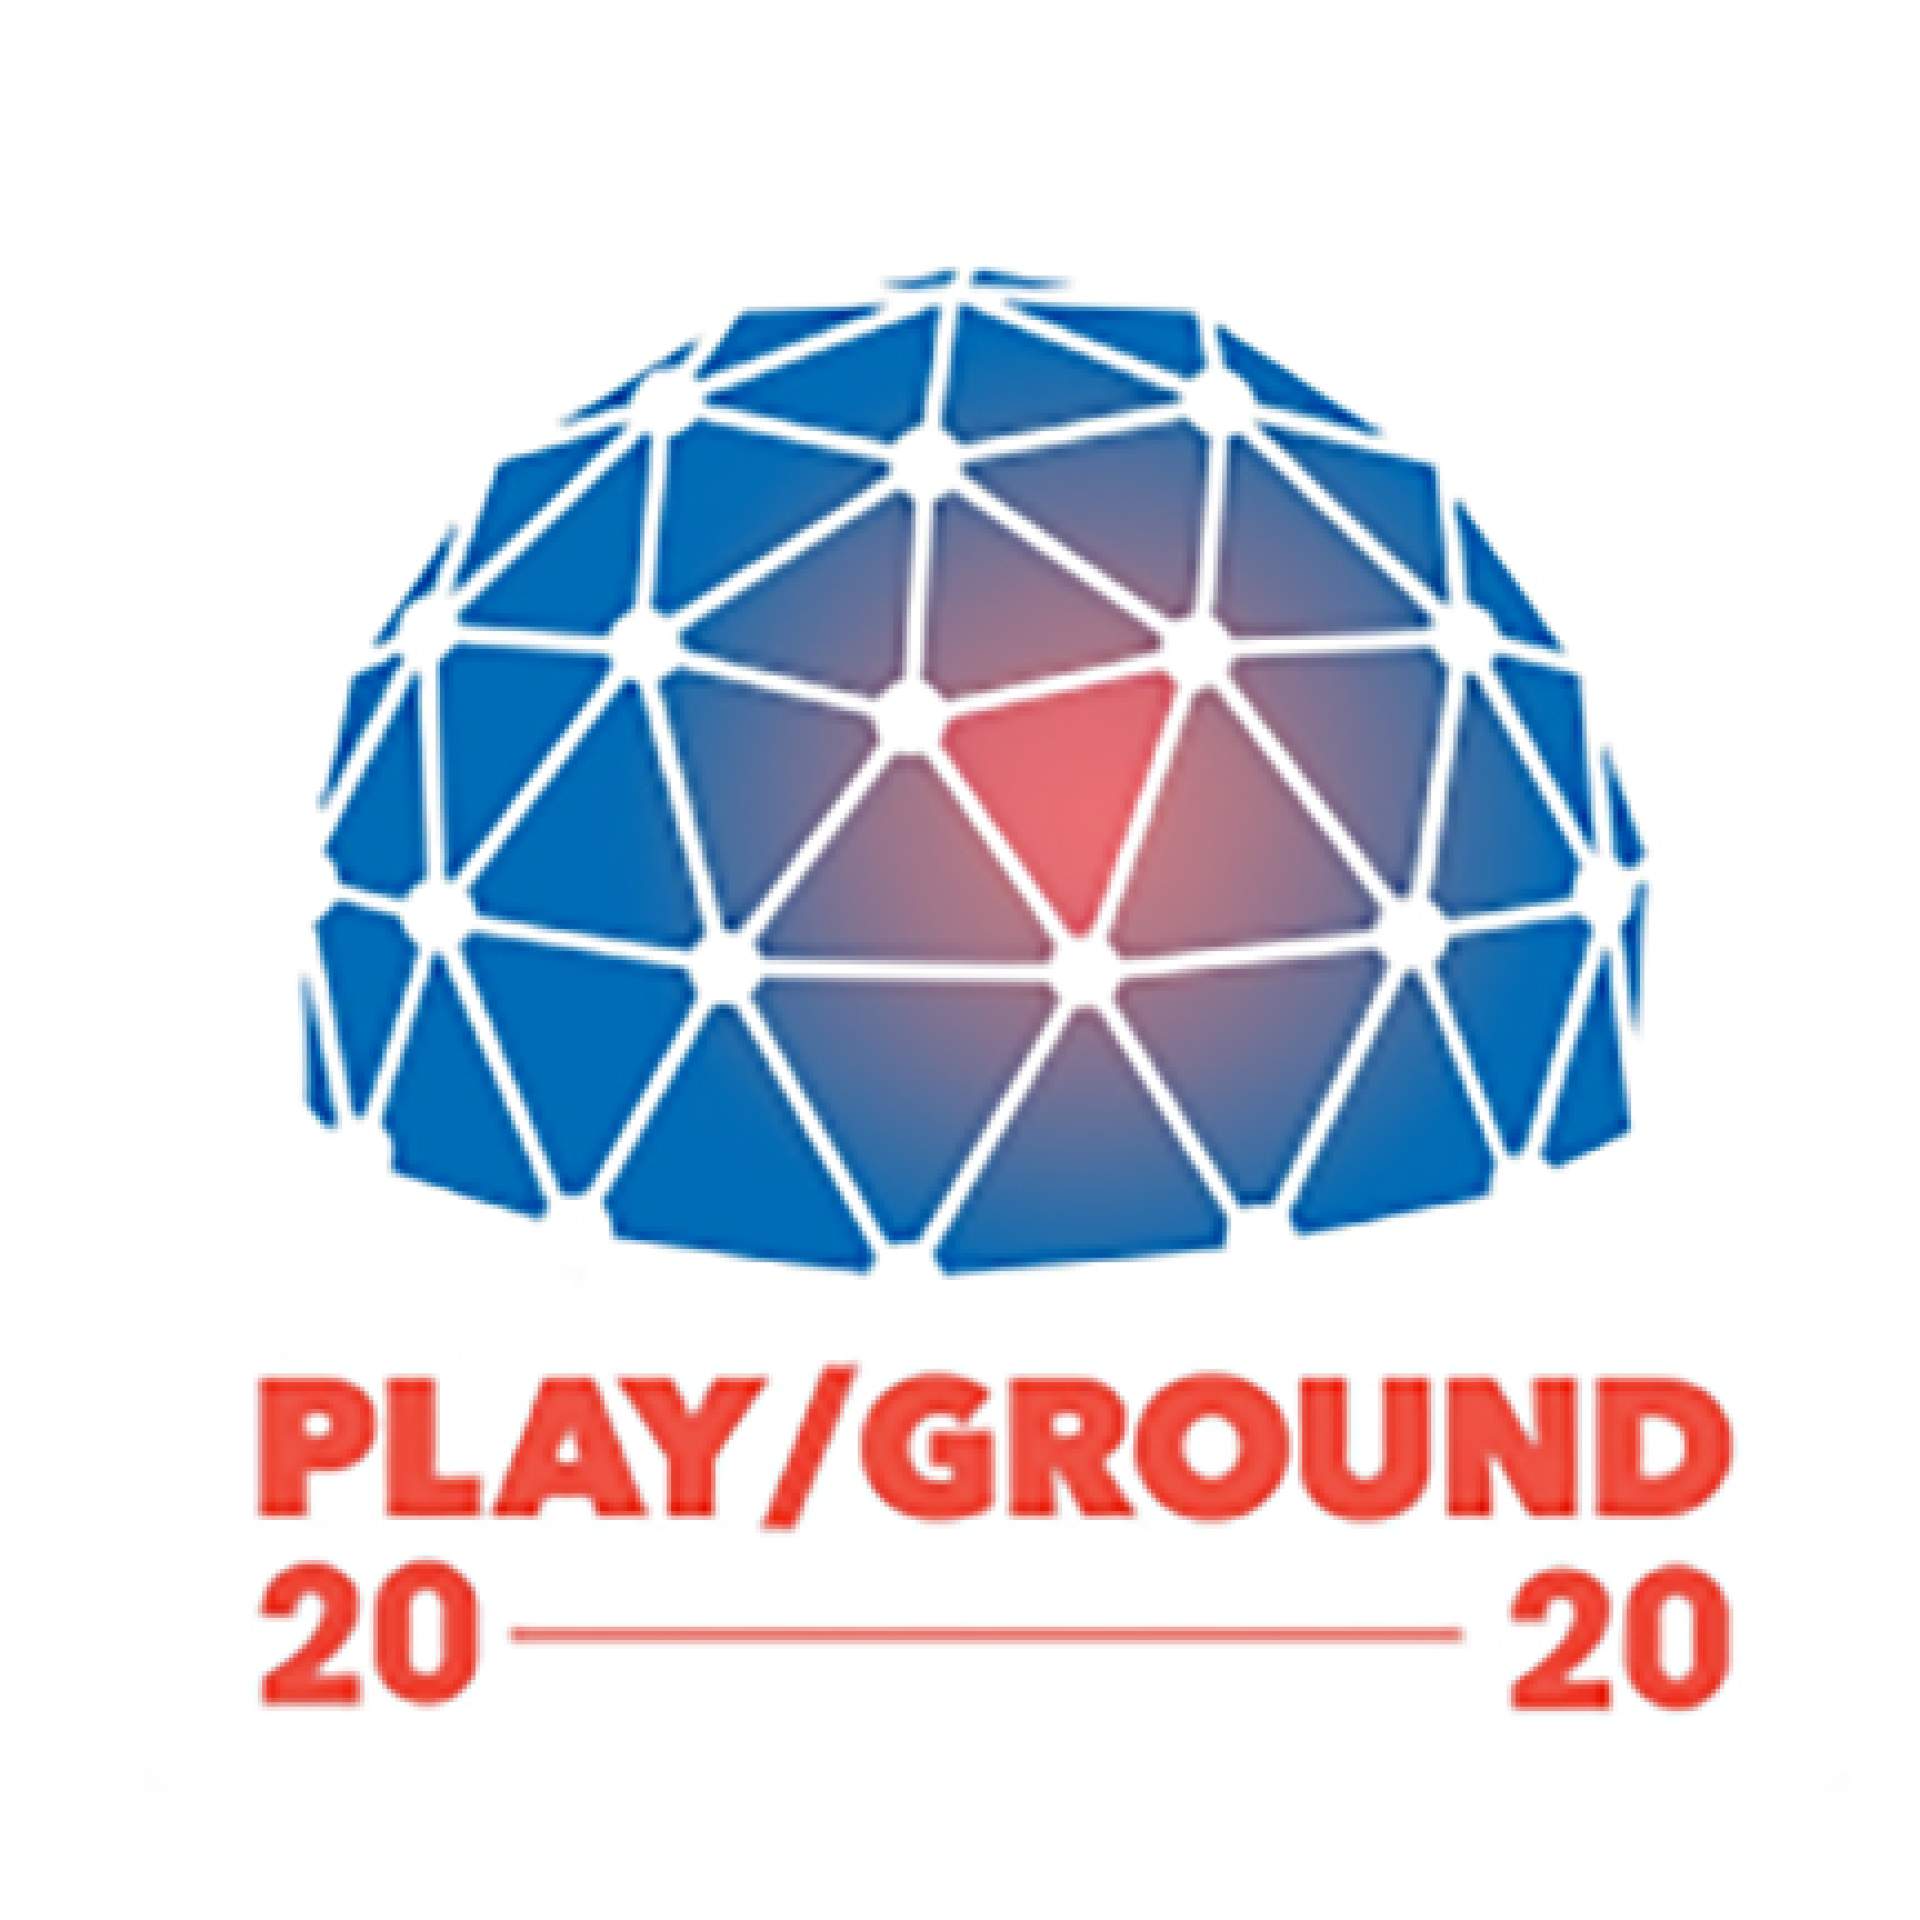 [Playground 2020 logo]